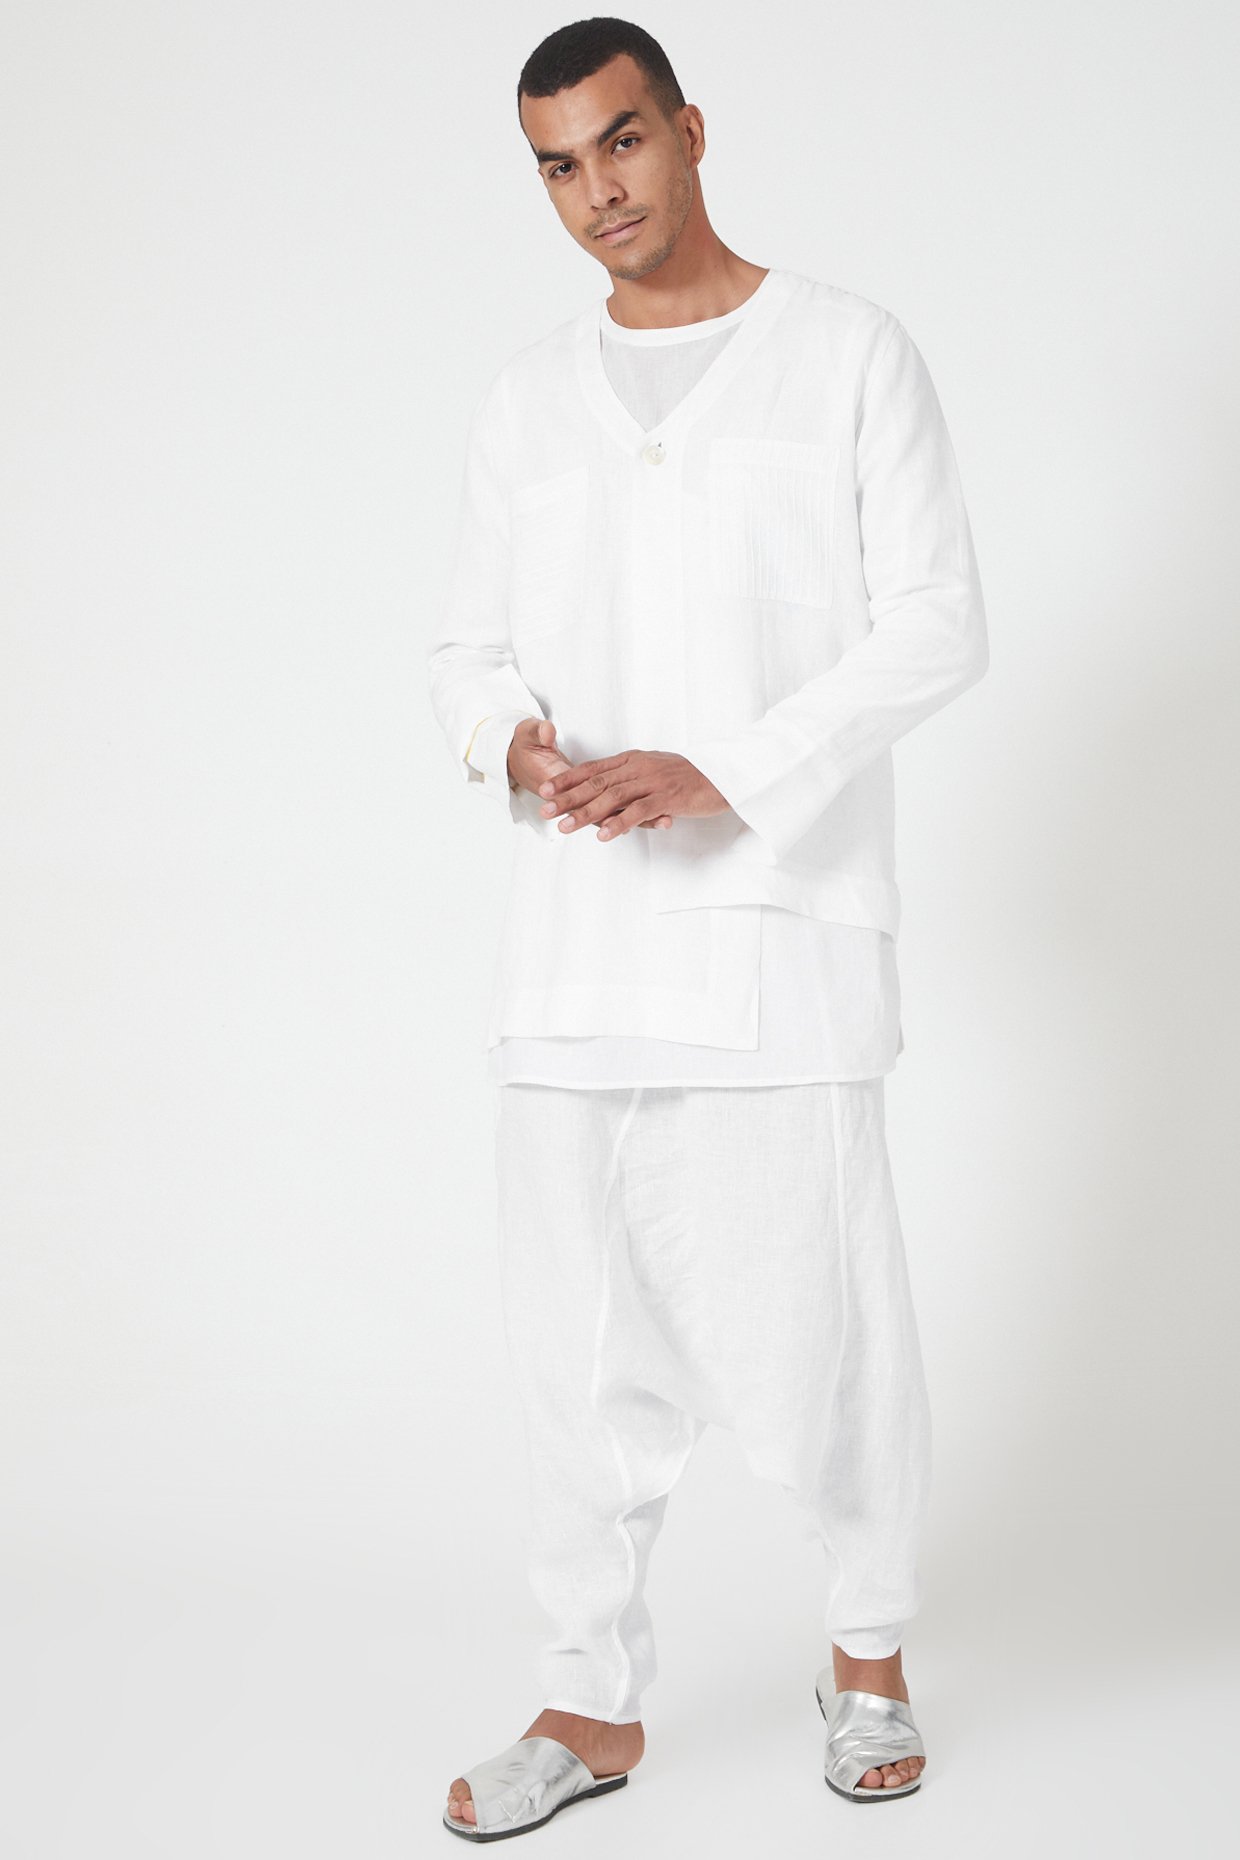 Buy White Cotton Dhoti Pants  TAN812  The loom